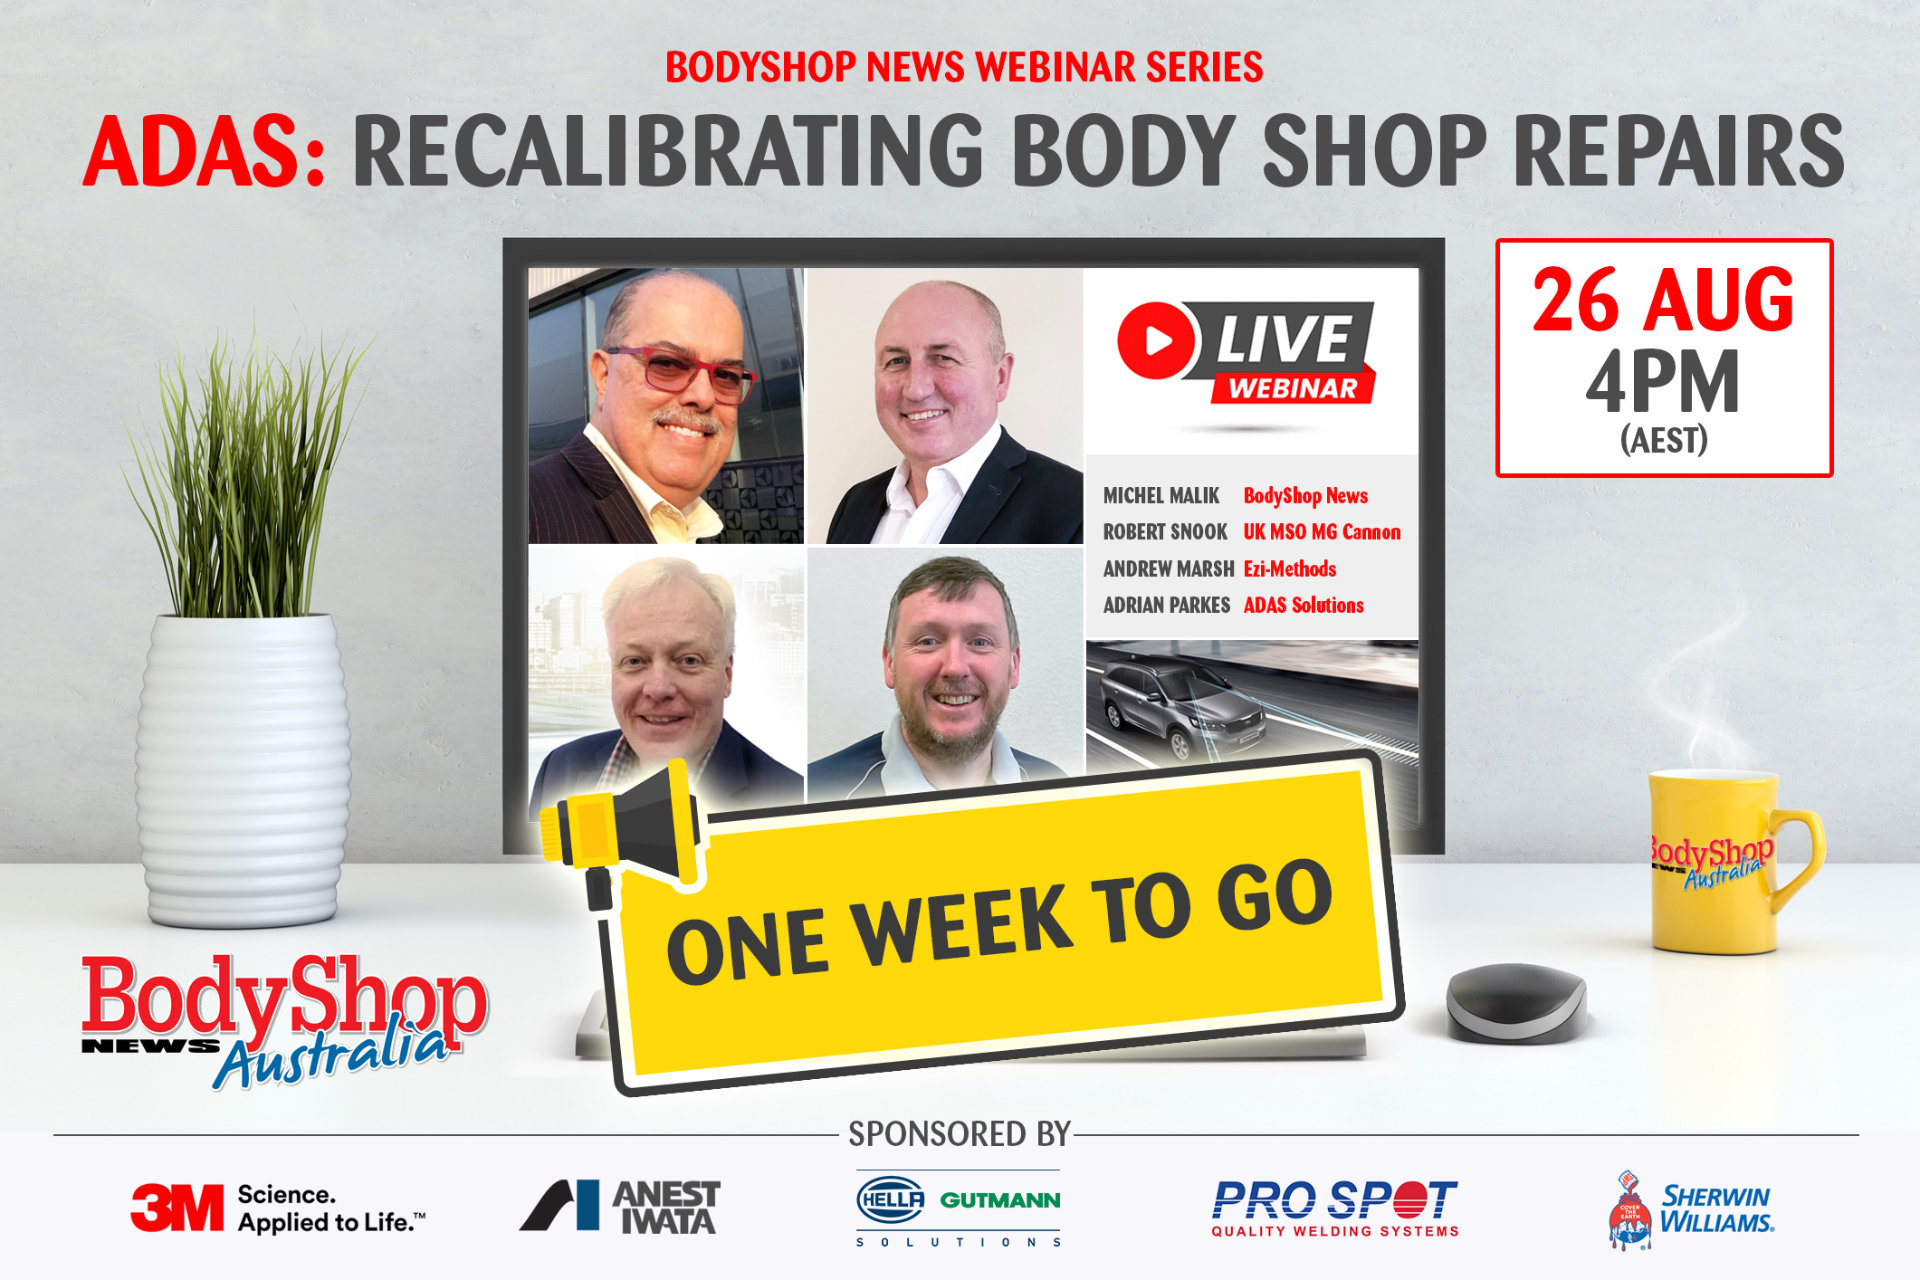 BodyShop News Australia Launches First Webinar - 1 Week To Go